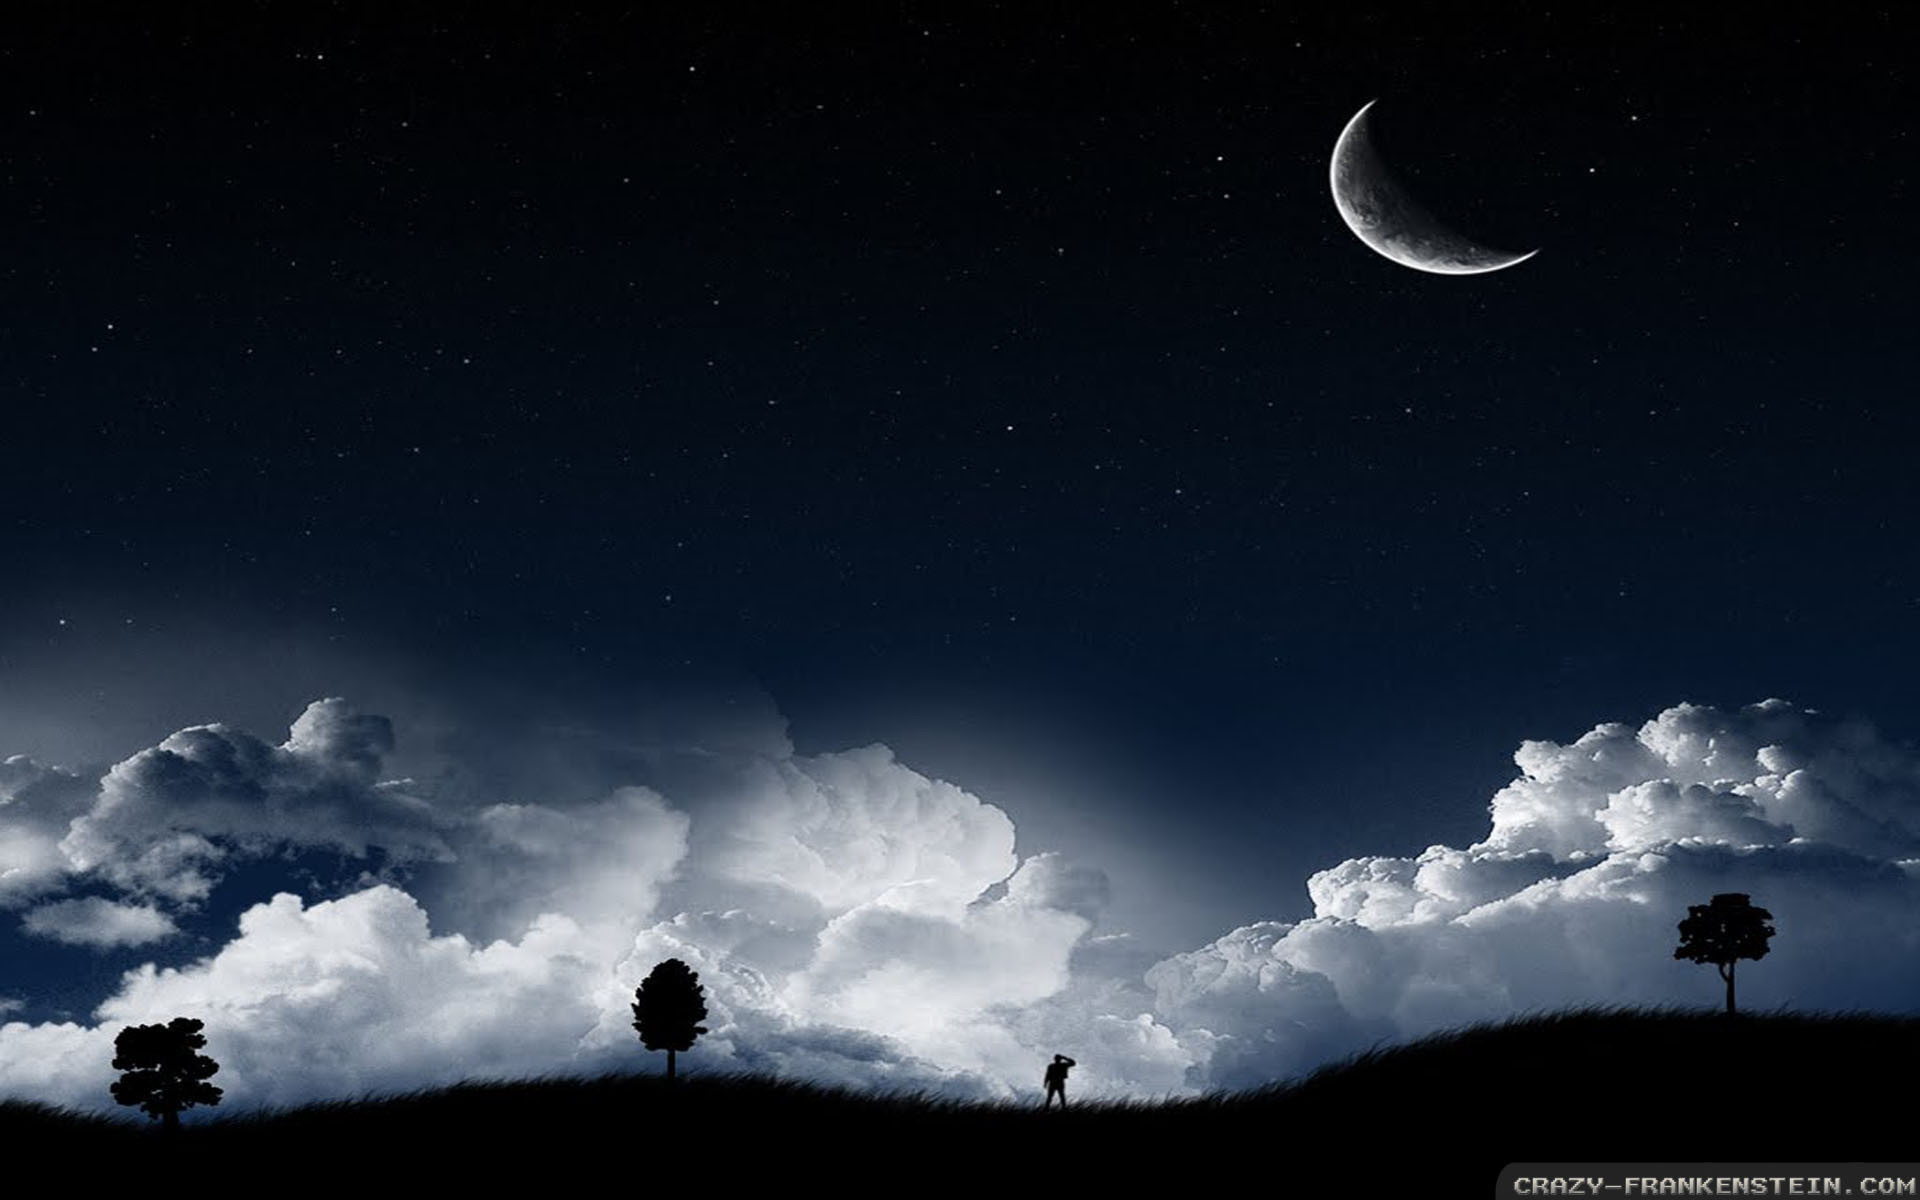 1920x1200 Wallpaper: Summer Night Sky And Moon Resolution: 1024x768 | 1280x1024 |  1600x1200. Widescreen Res: 1440x900 | 1680x1050 | 